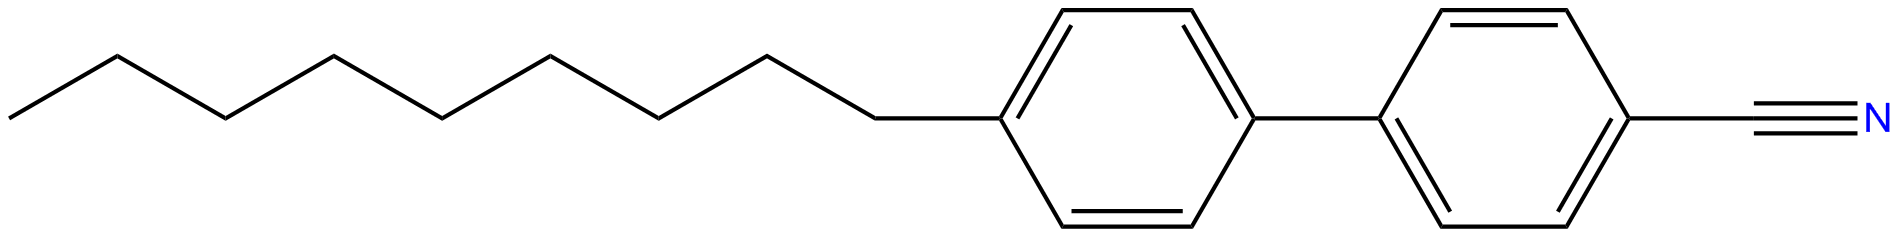 Image of 4-cyano-4'-nonyl-1,1'-biphenyl